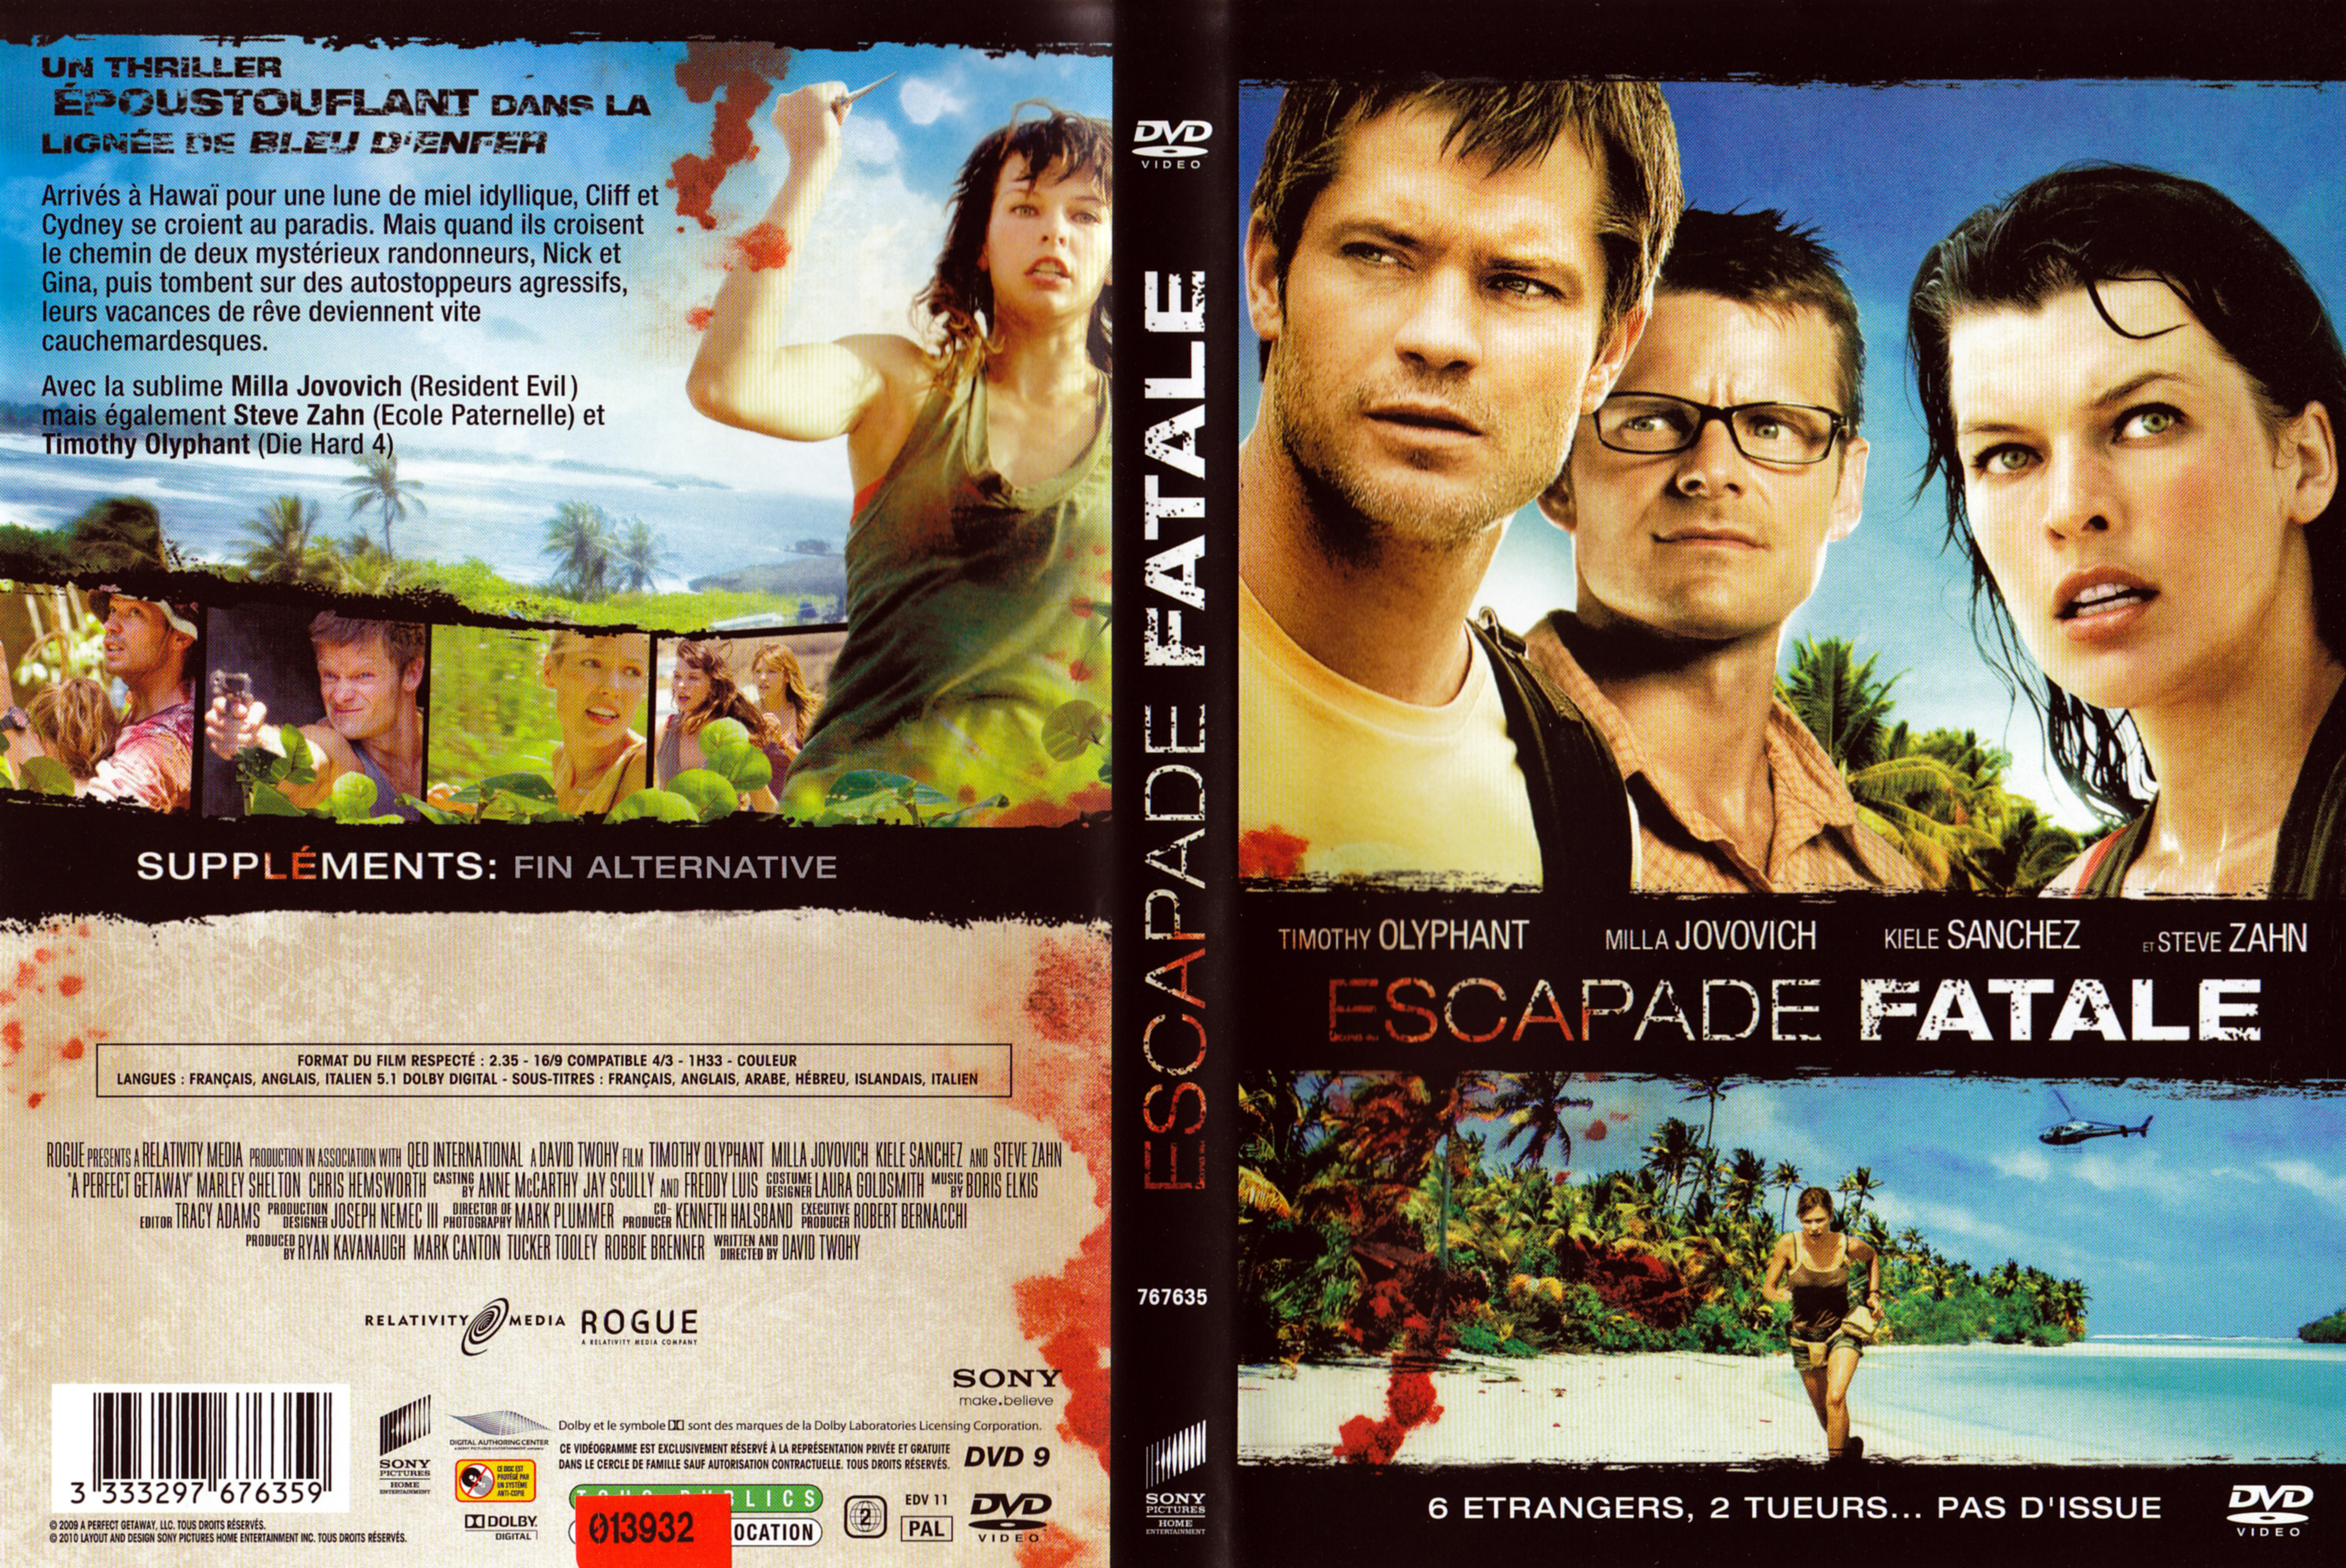 Jaquette DVD Escapade fatale